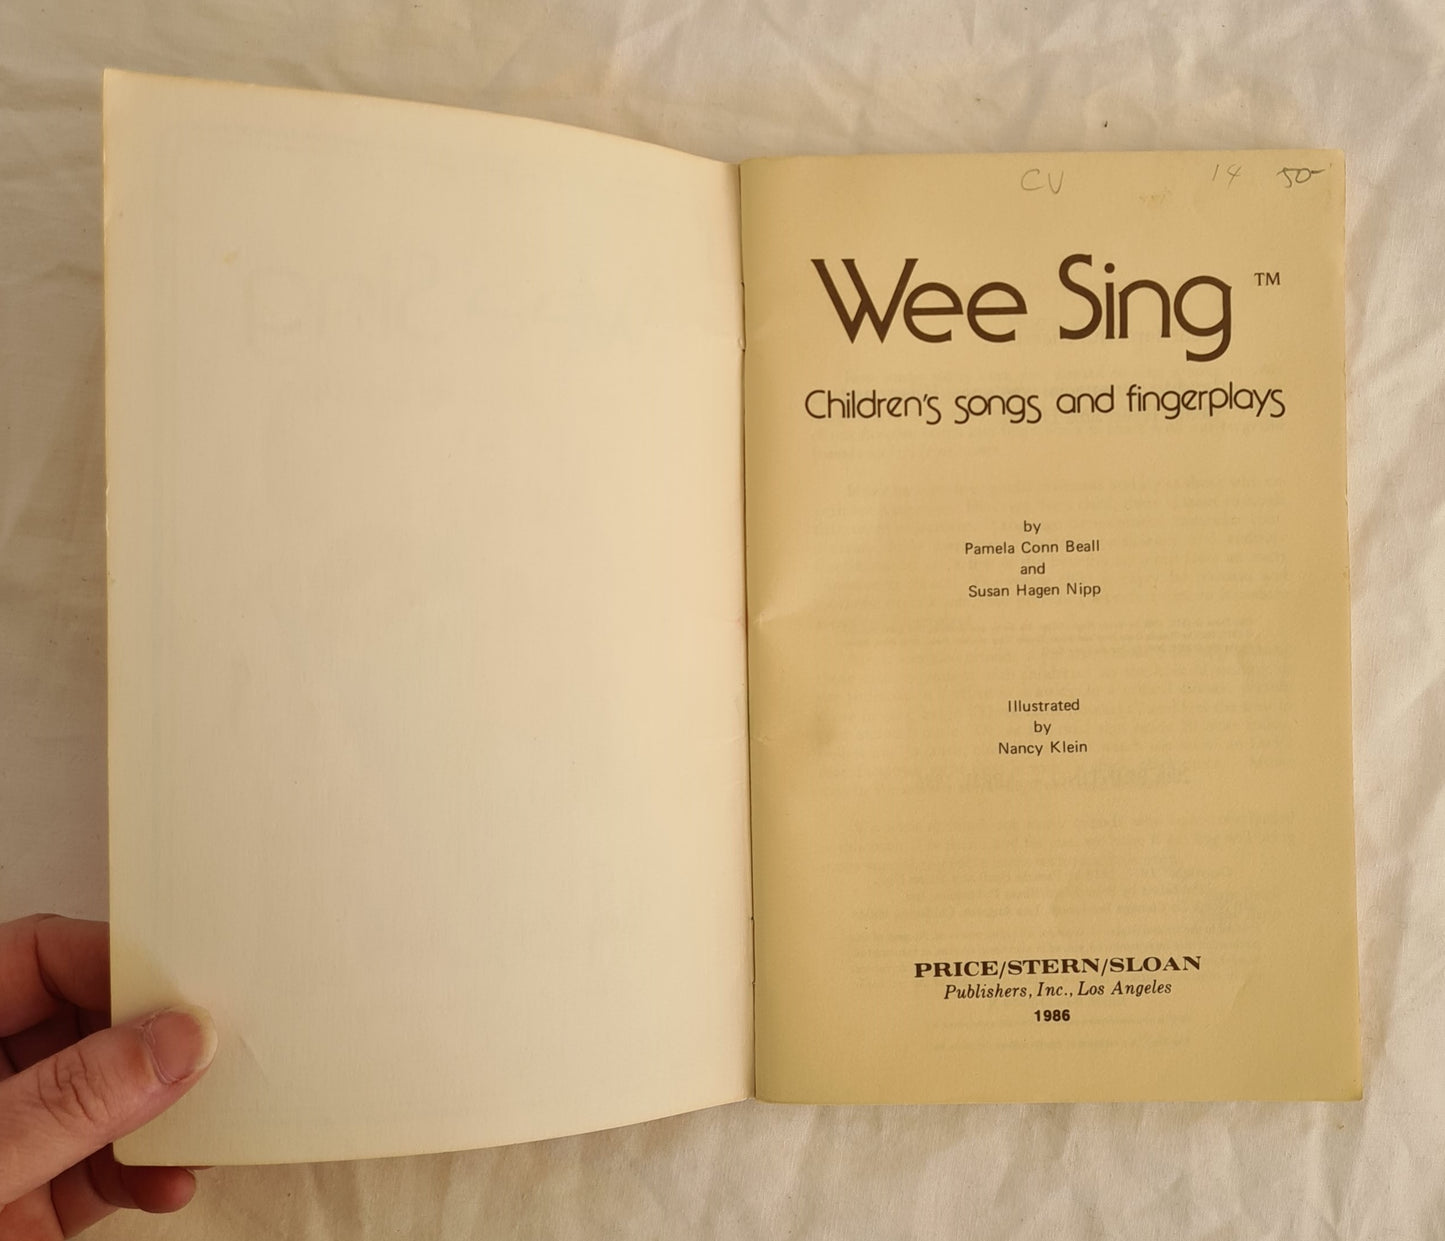 Wee Sing by Pamela Conn Beall and Susan Hagen Nipp